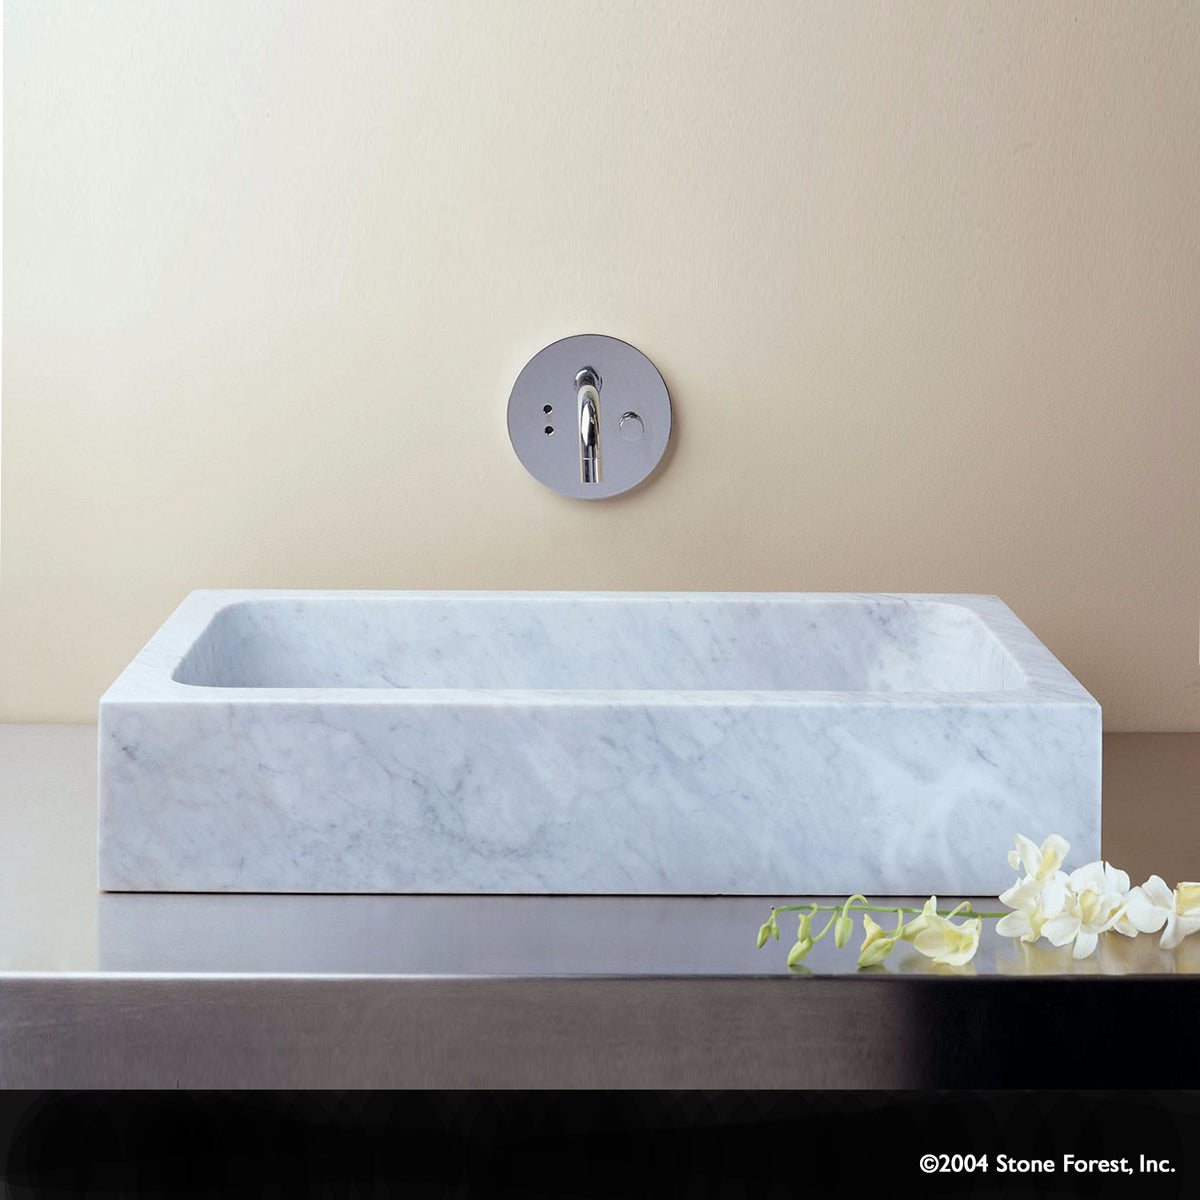 Milano Vessel bath sink in carrara marble image 3 of 3